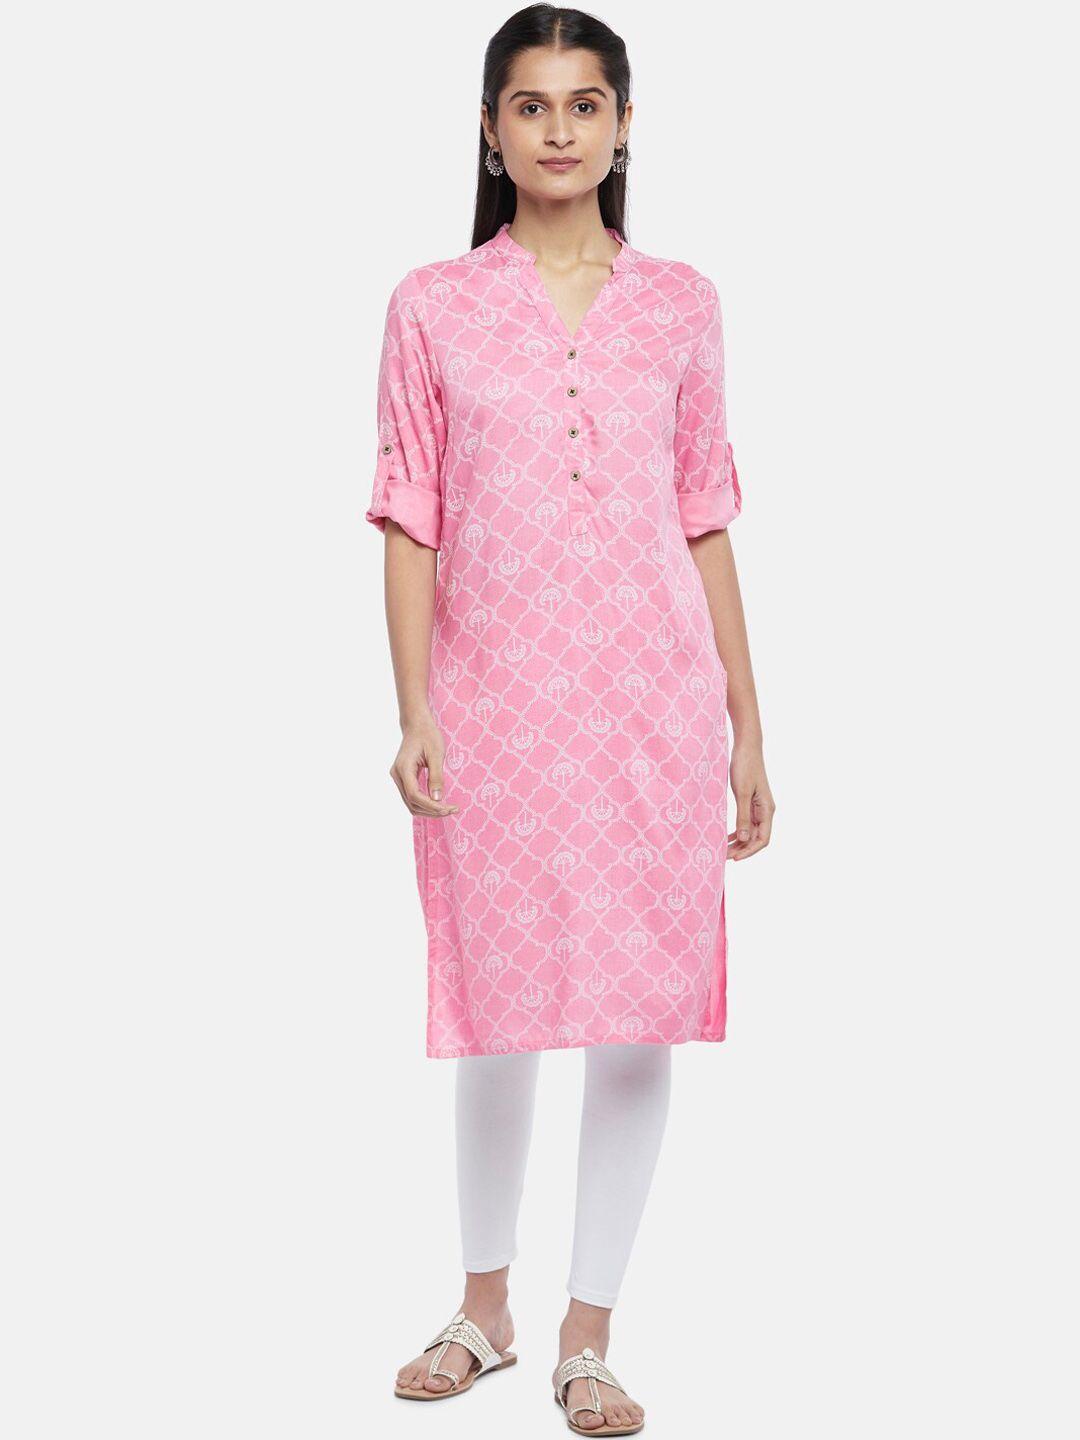 rangmanch by pantaloons pink geometric printed floral kurta